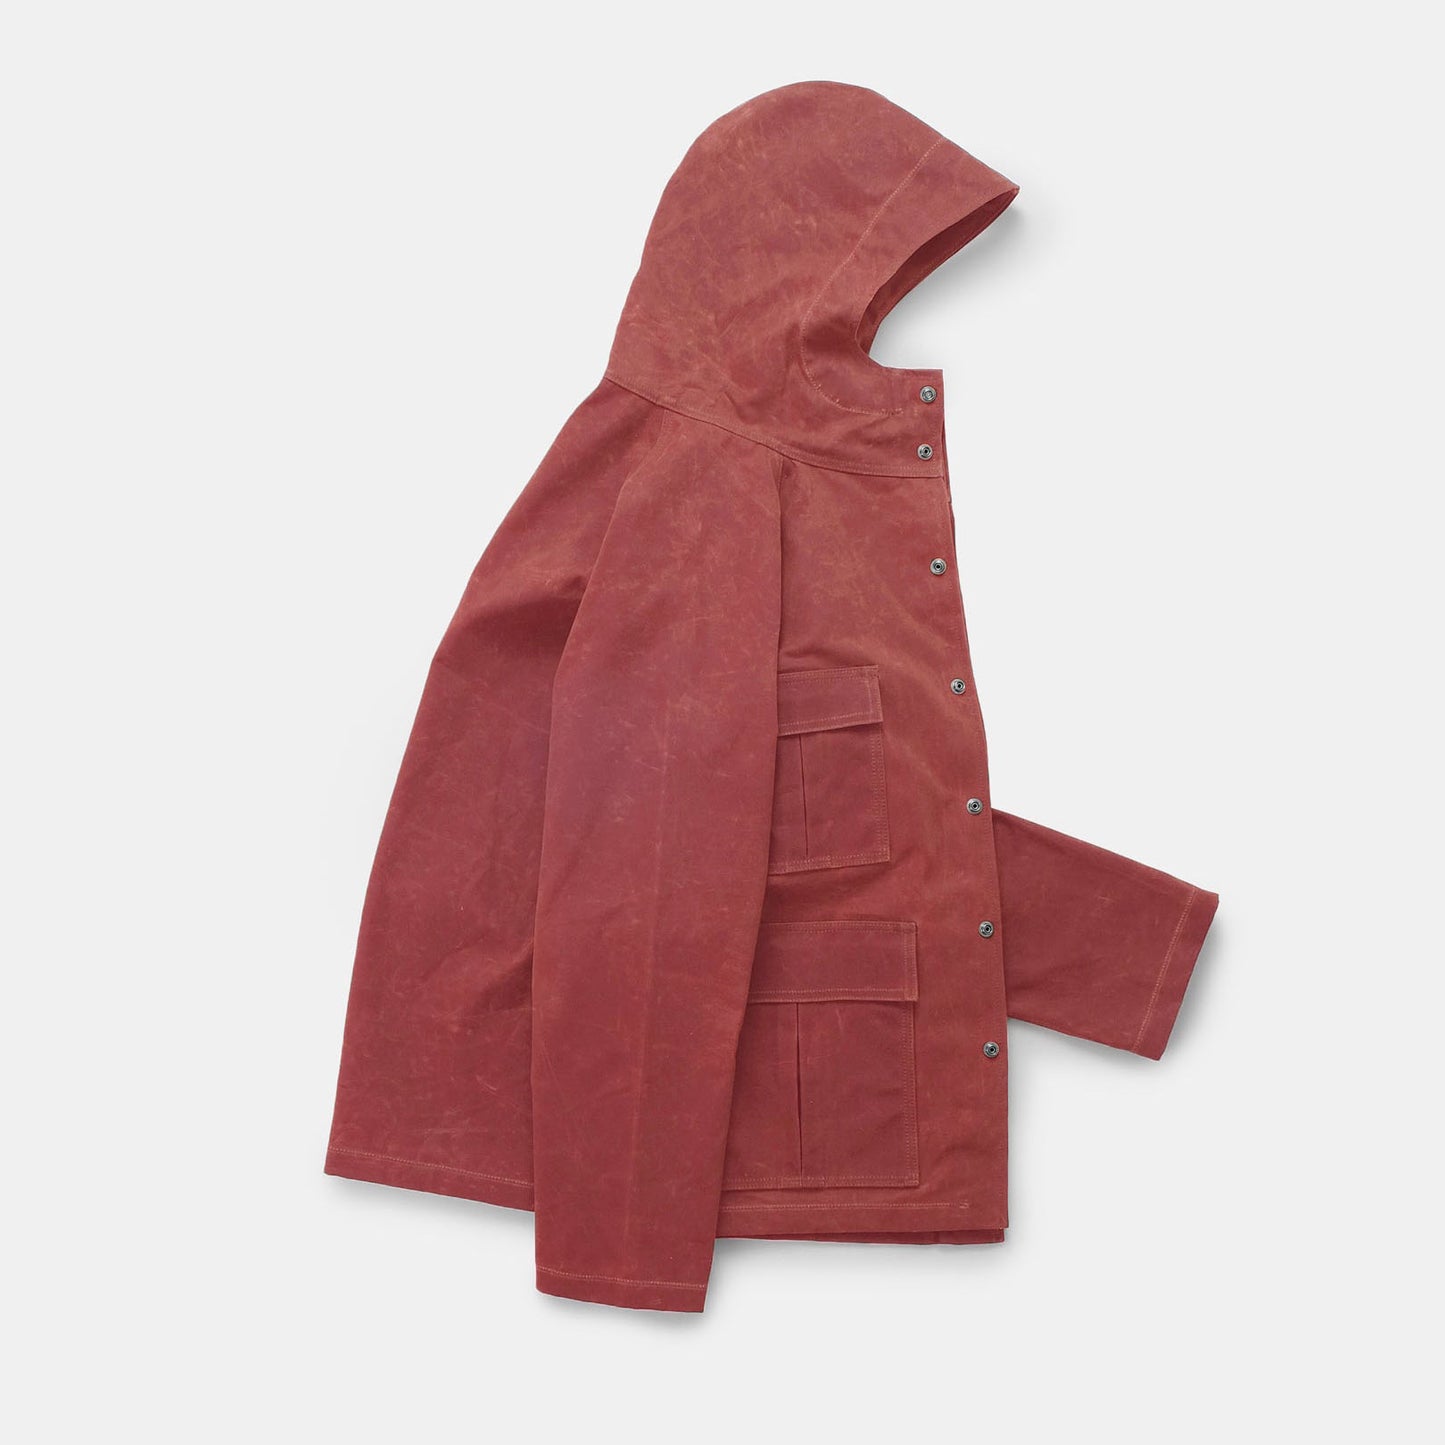 Heavy Duty Raincoat in Nautical Red Waxed Canvas